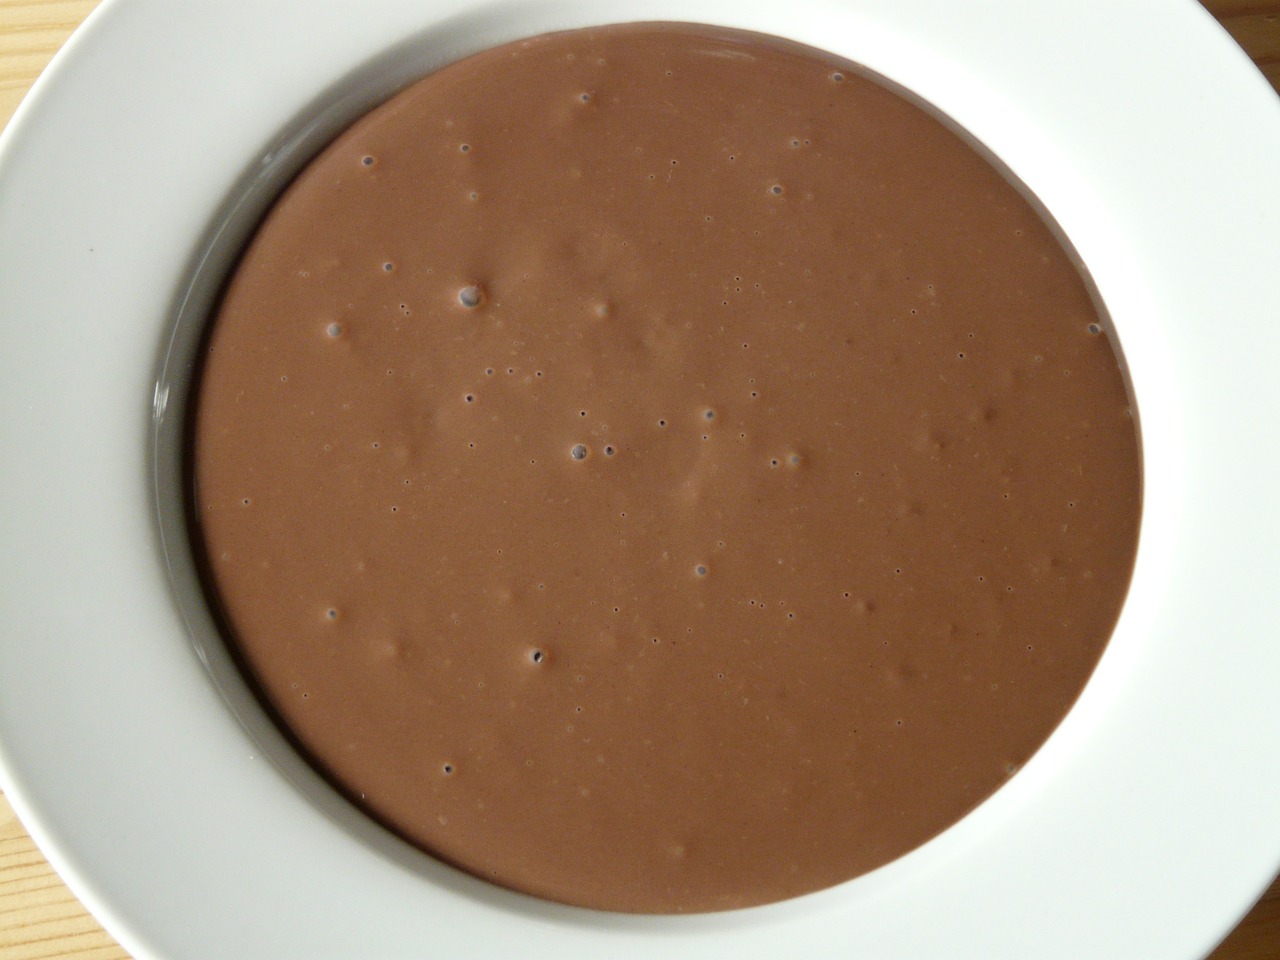 Microwave Chocolate Pudding